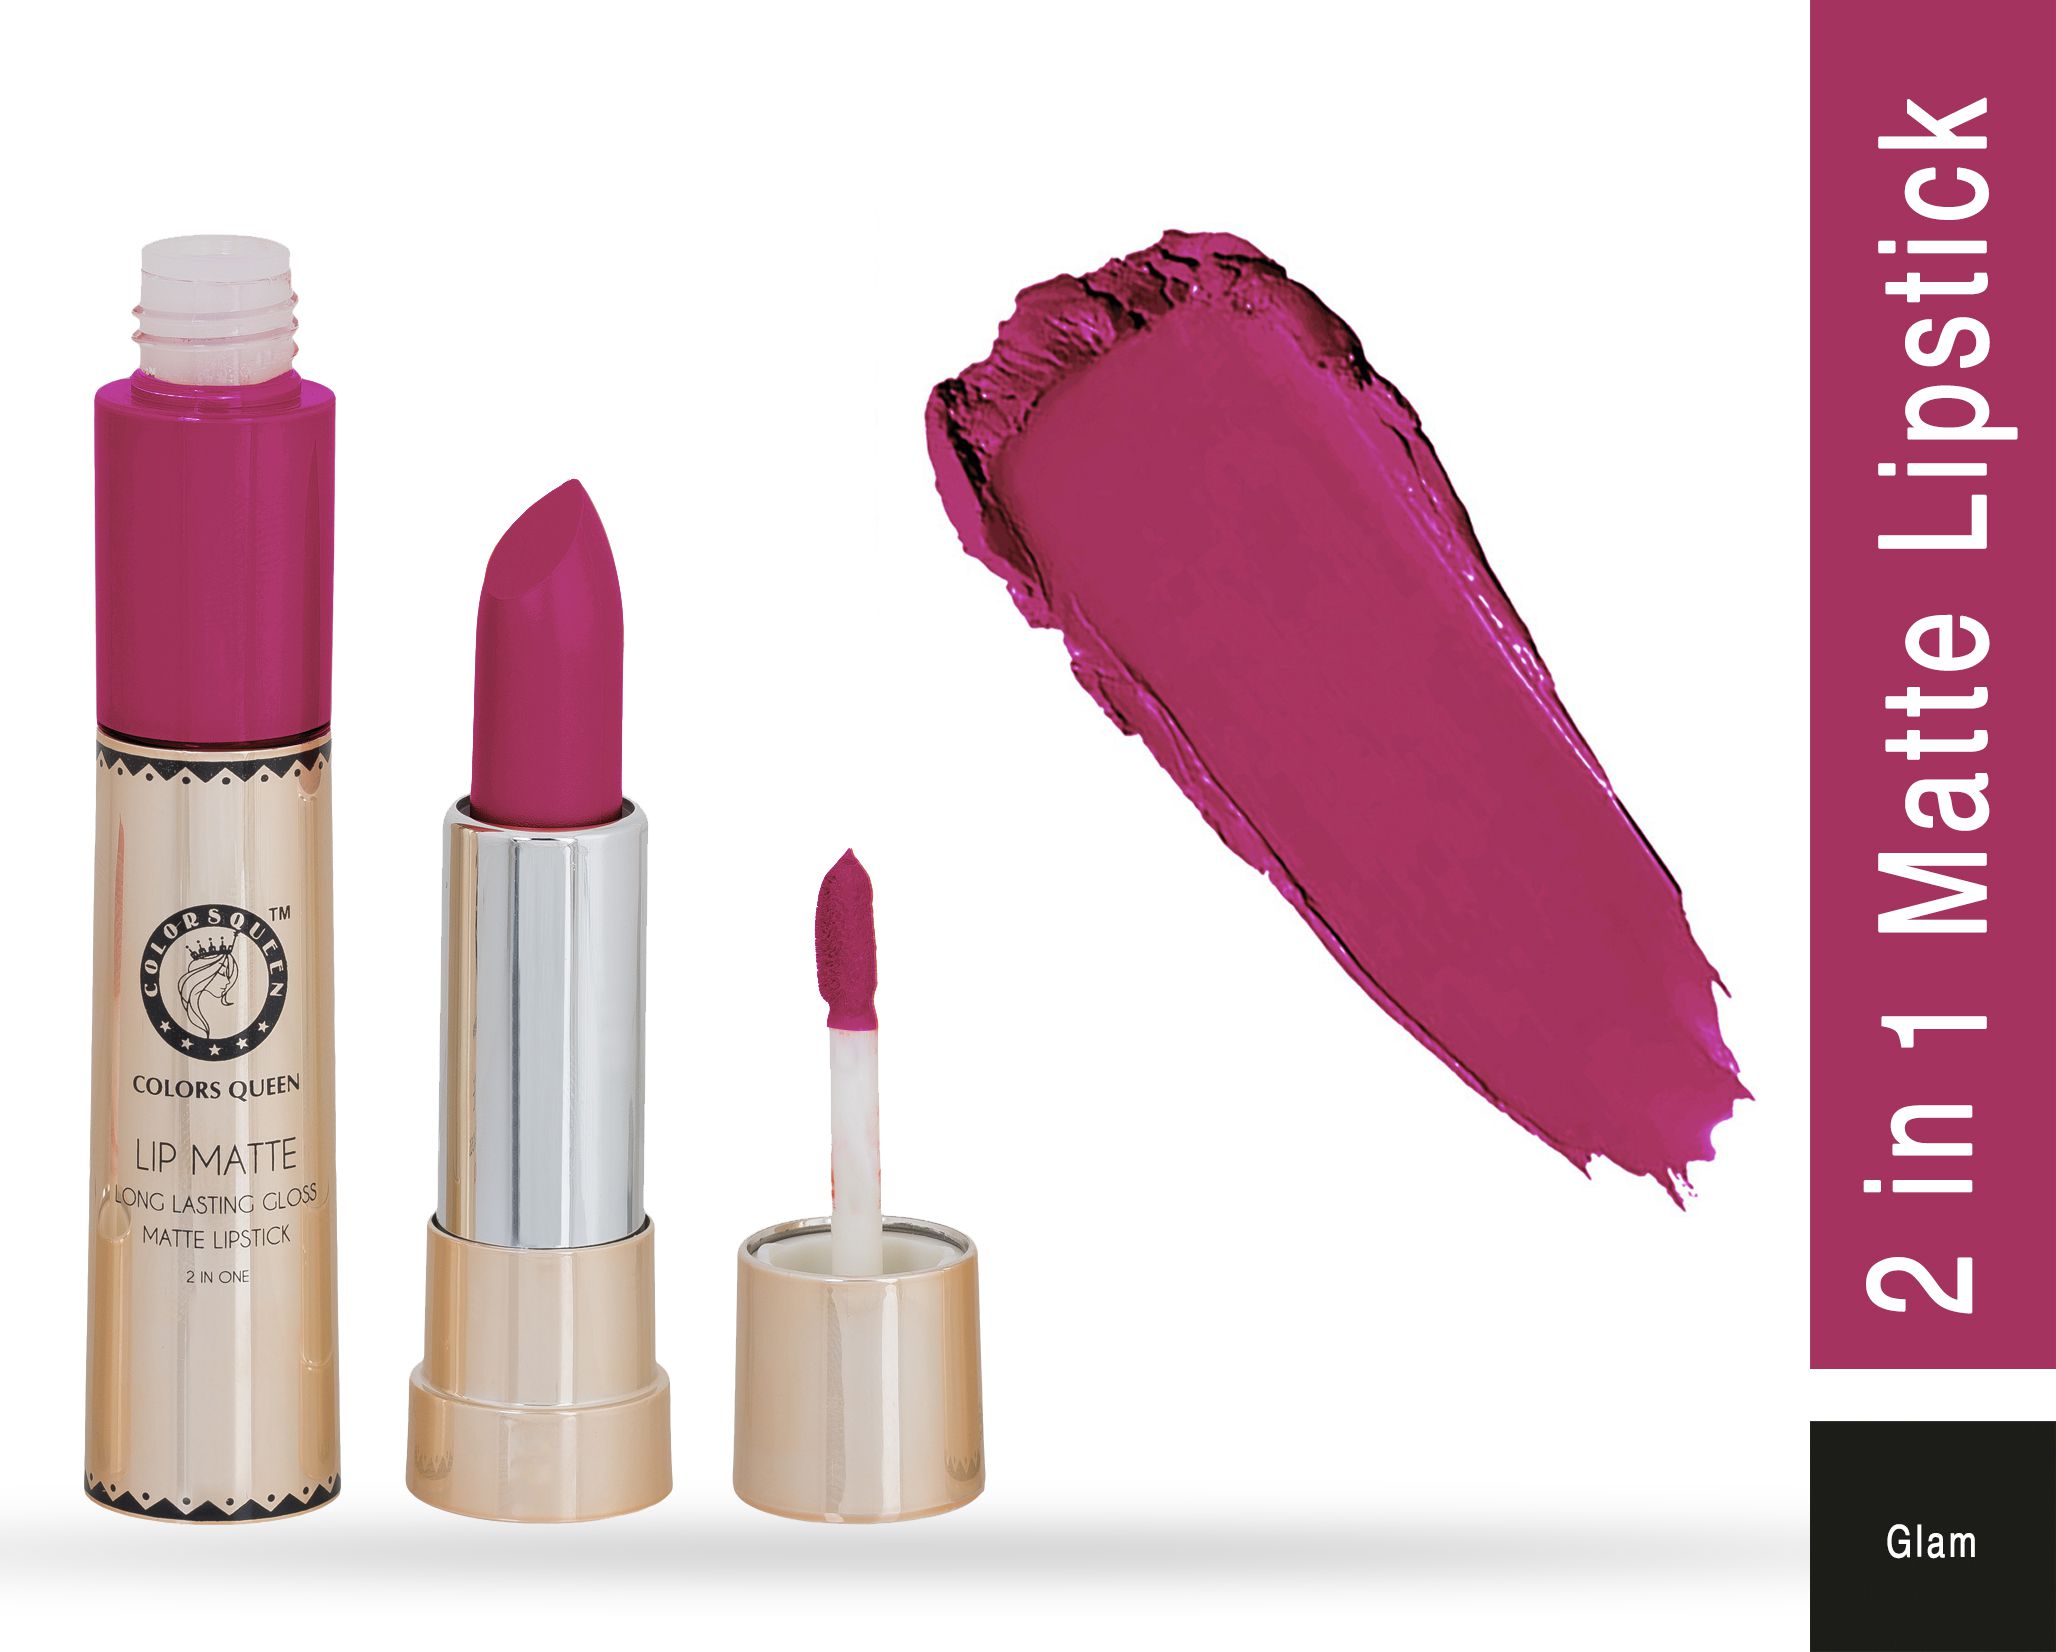     			Colors Queen 2 in 1 Liquid Lipstick Glam Shade | SPF 15 8 g